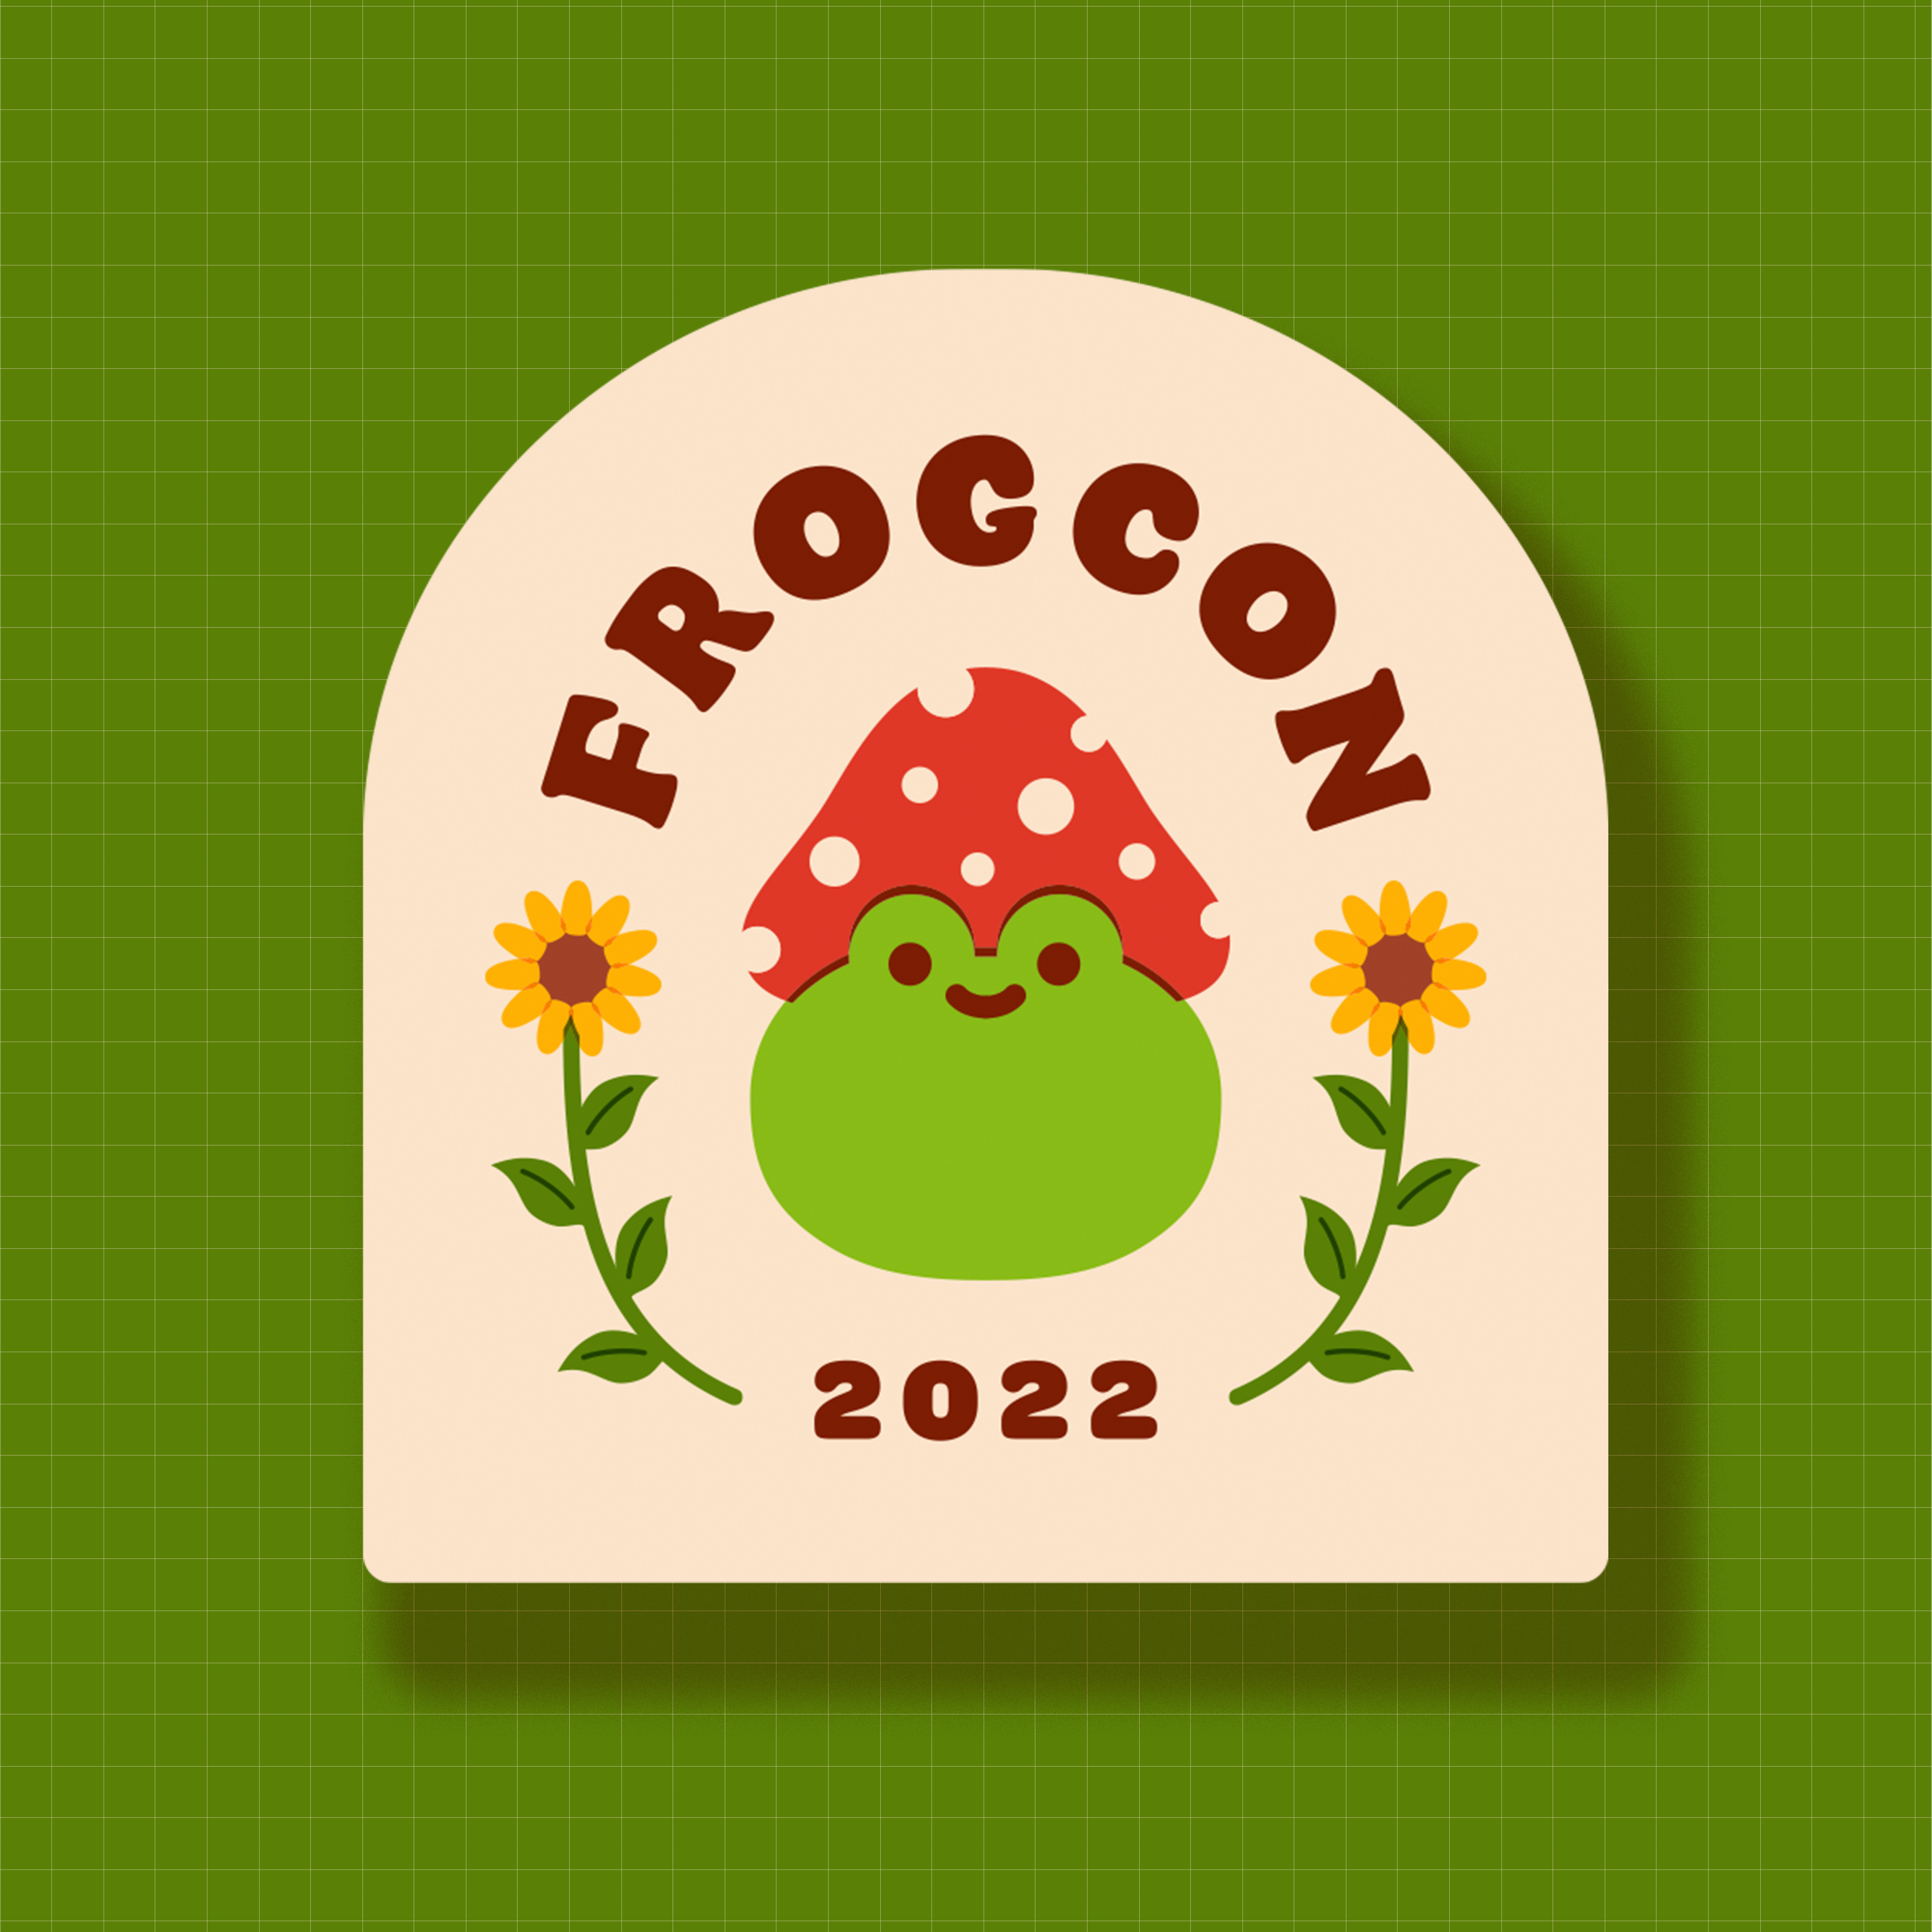 Frog Con 2022 logo sticker